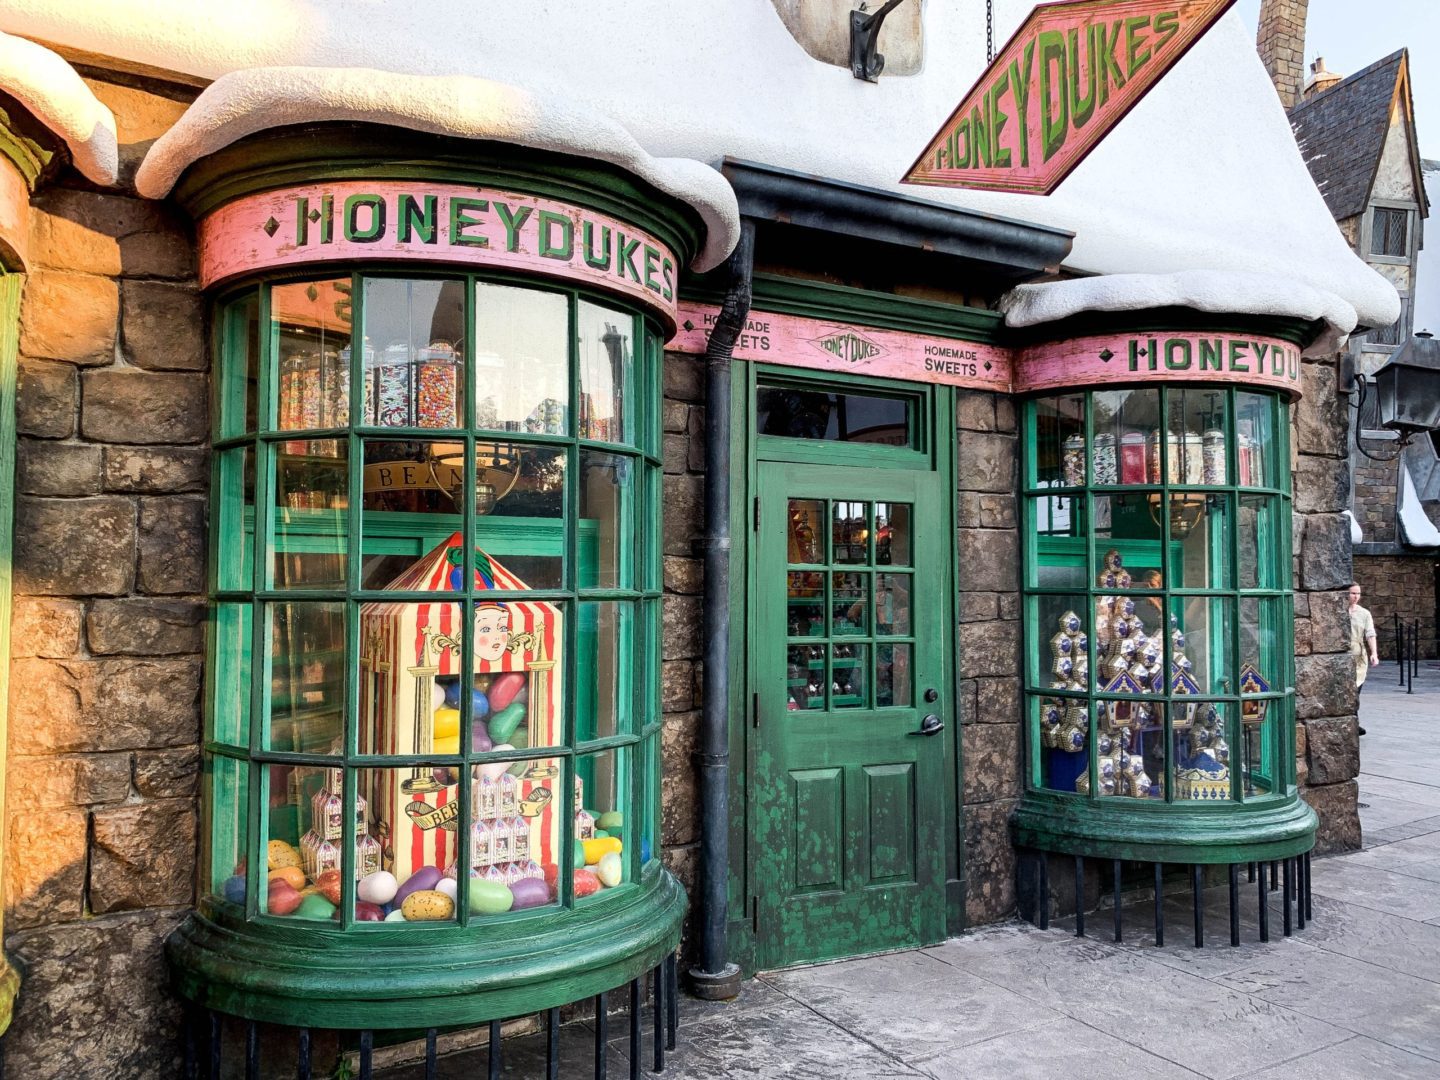 Universal Studios Honeydukes, the Wizarding World of Harry Potter